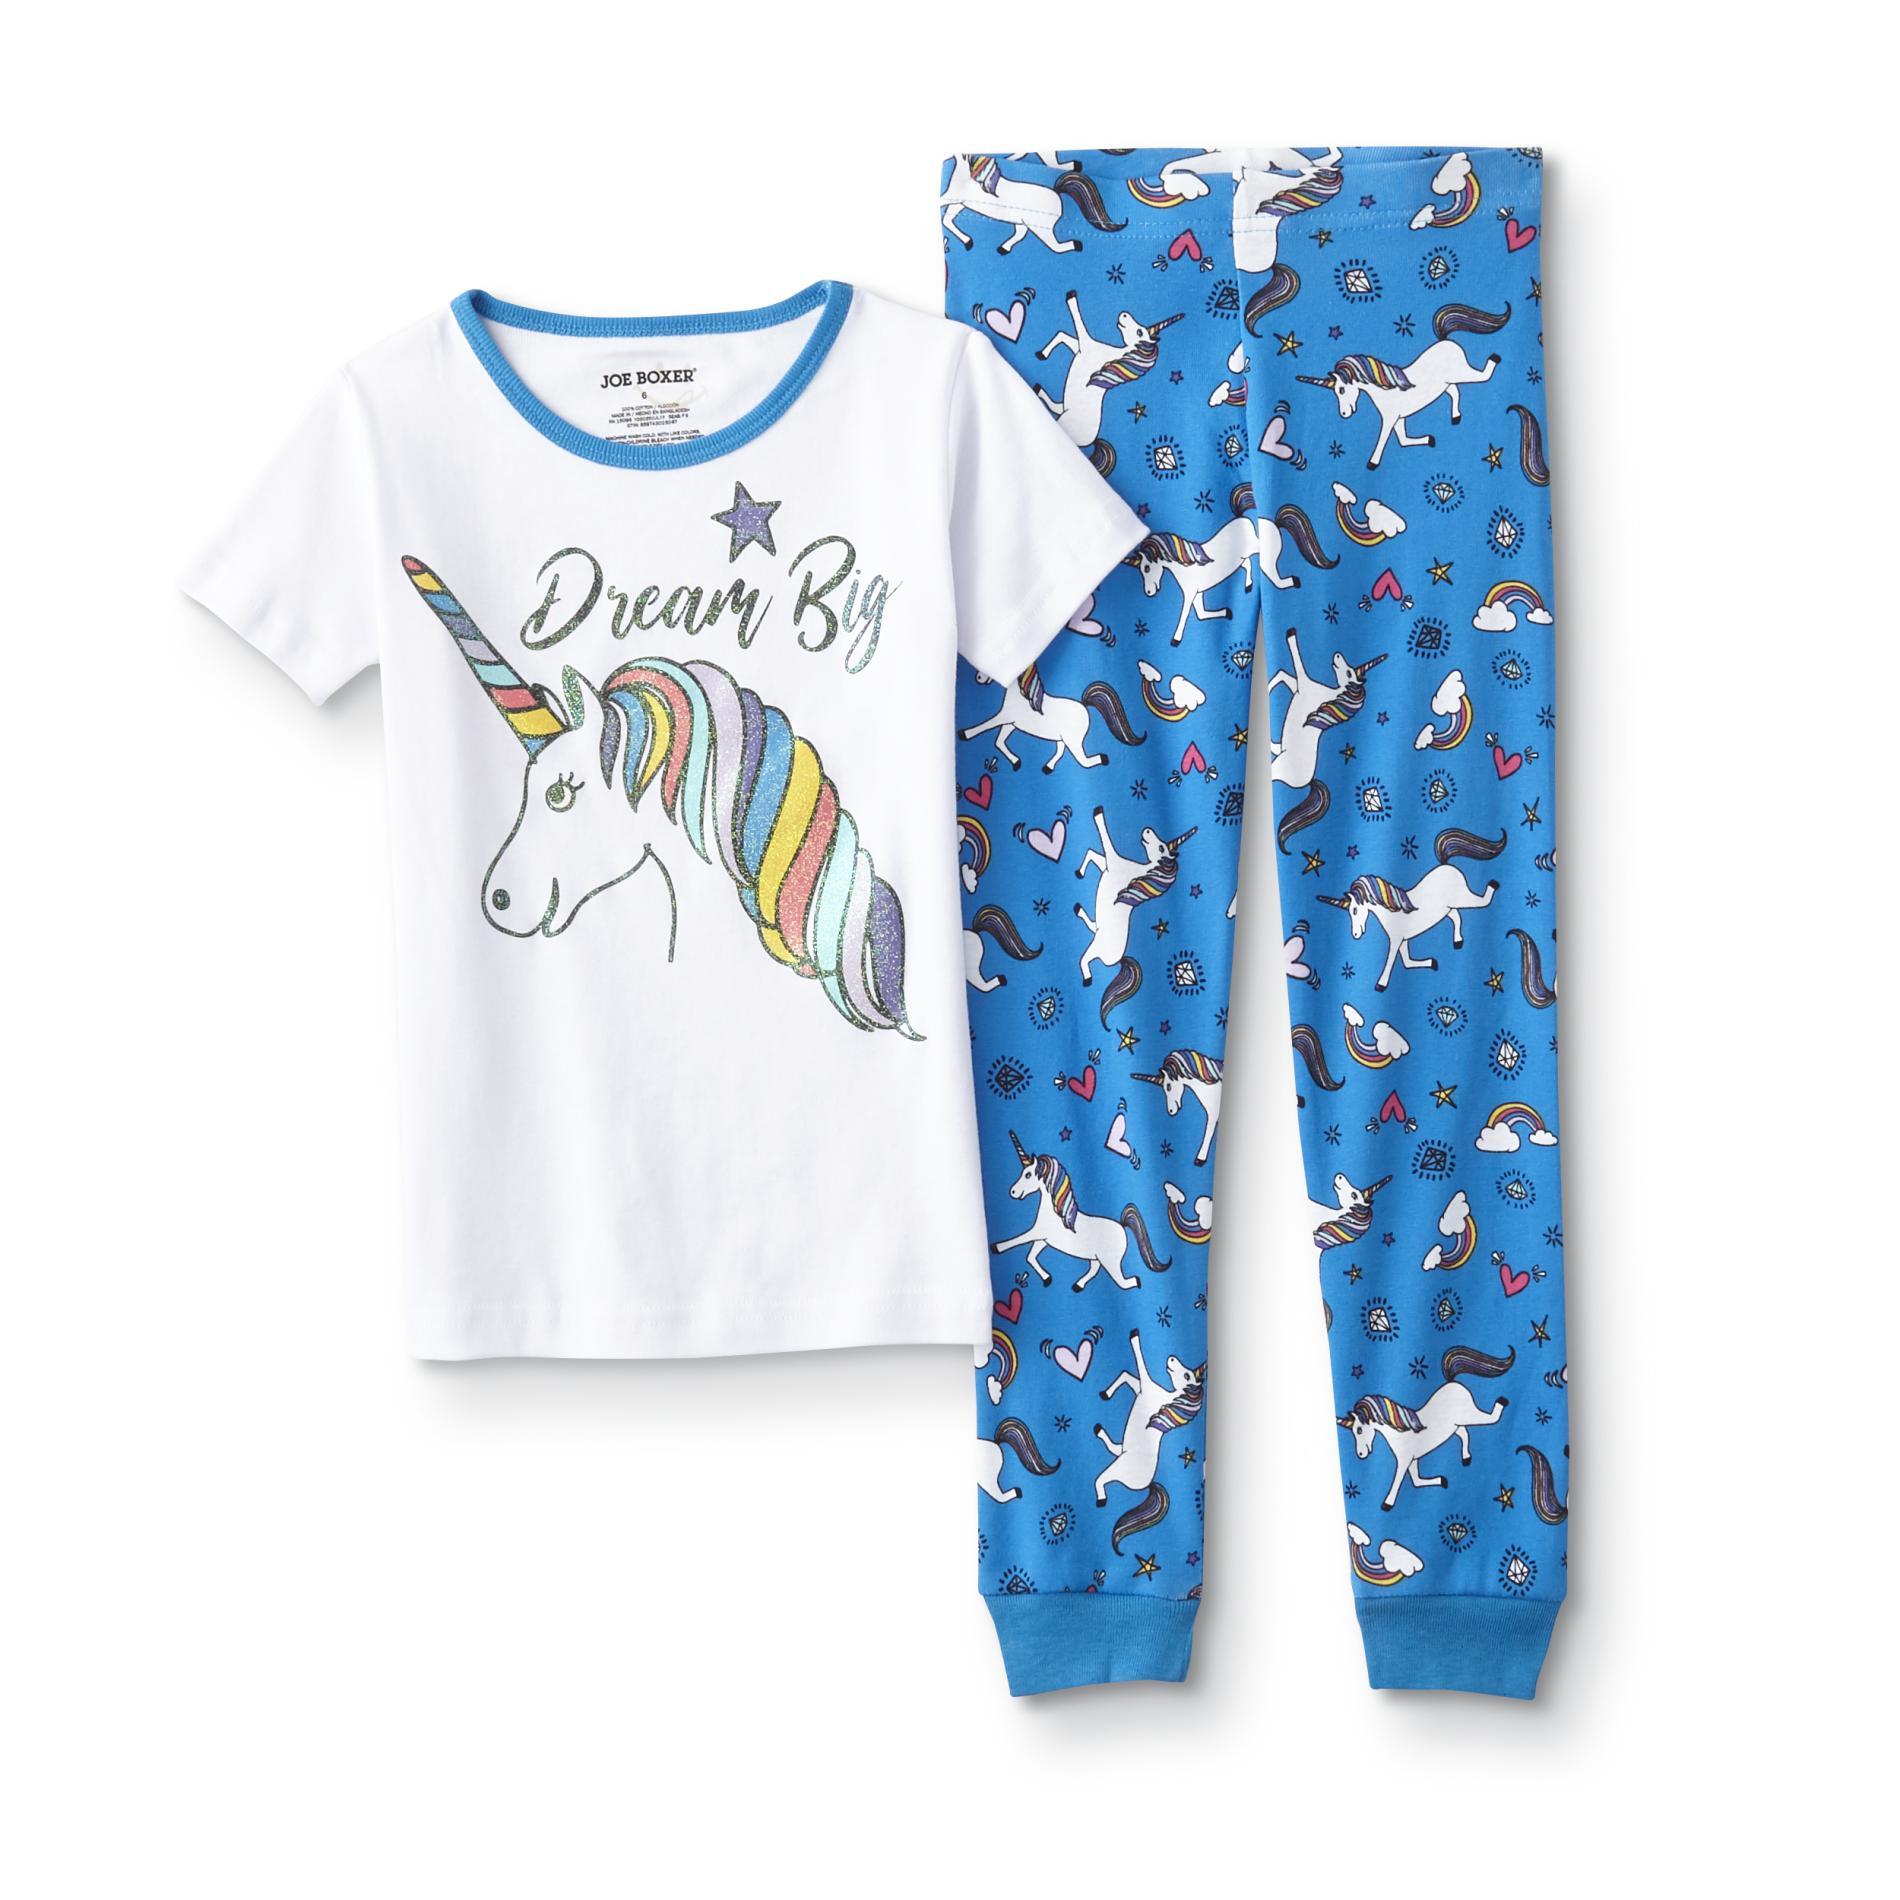 Joe Boxer Girls' Pajama Shirt & Leggings - Unicorn/Rainbows